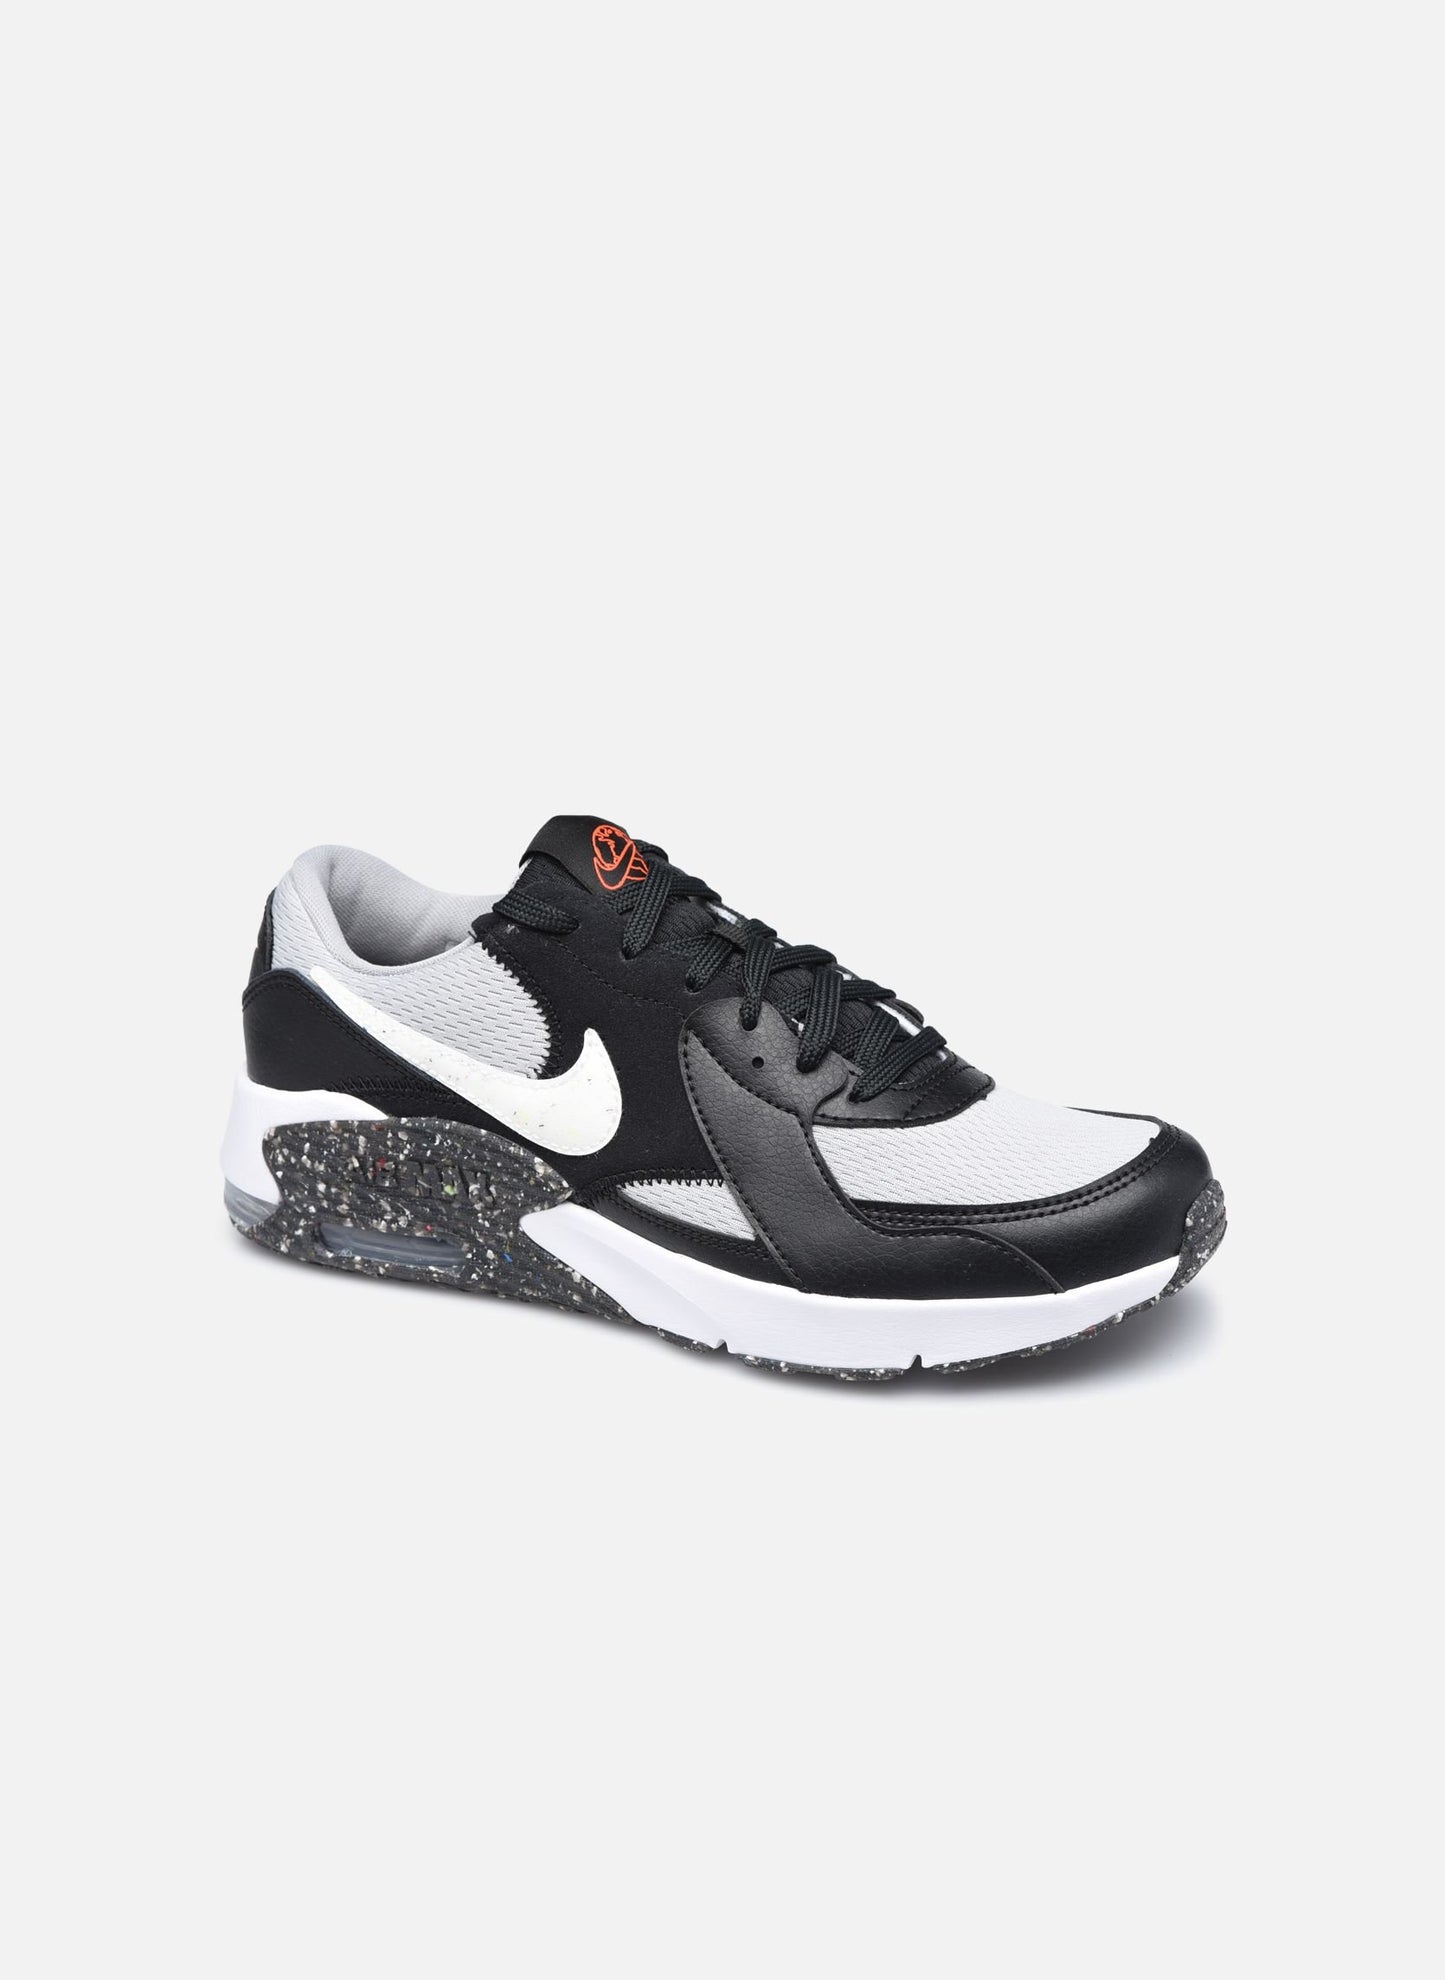 Nike - Air Max Excee - Smoke Grey